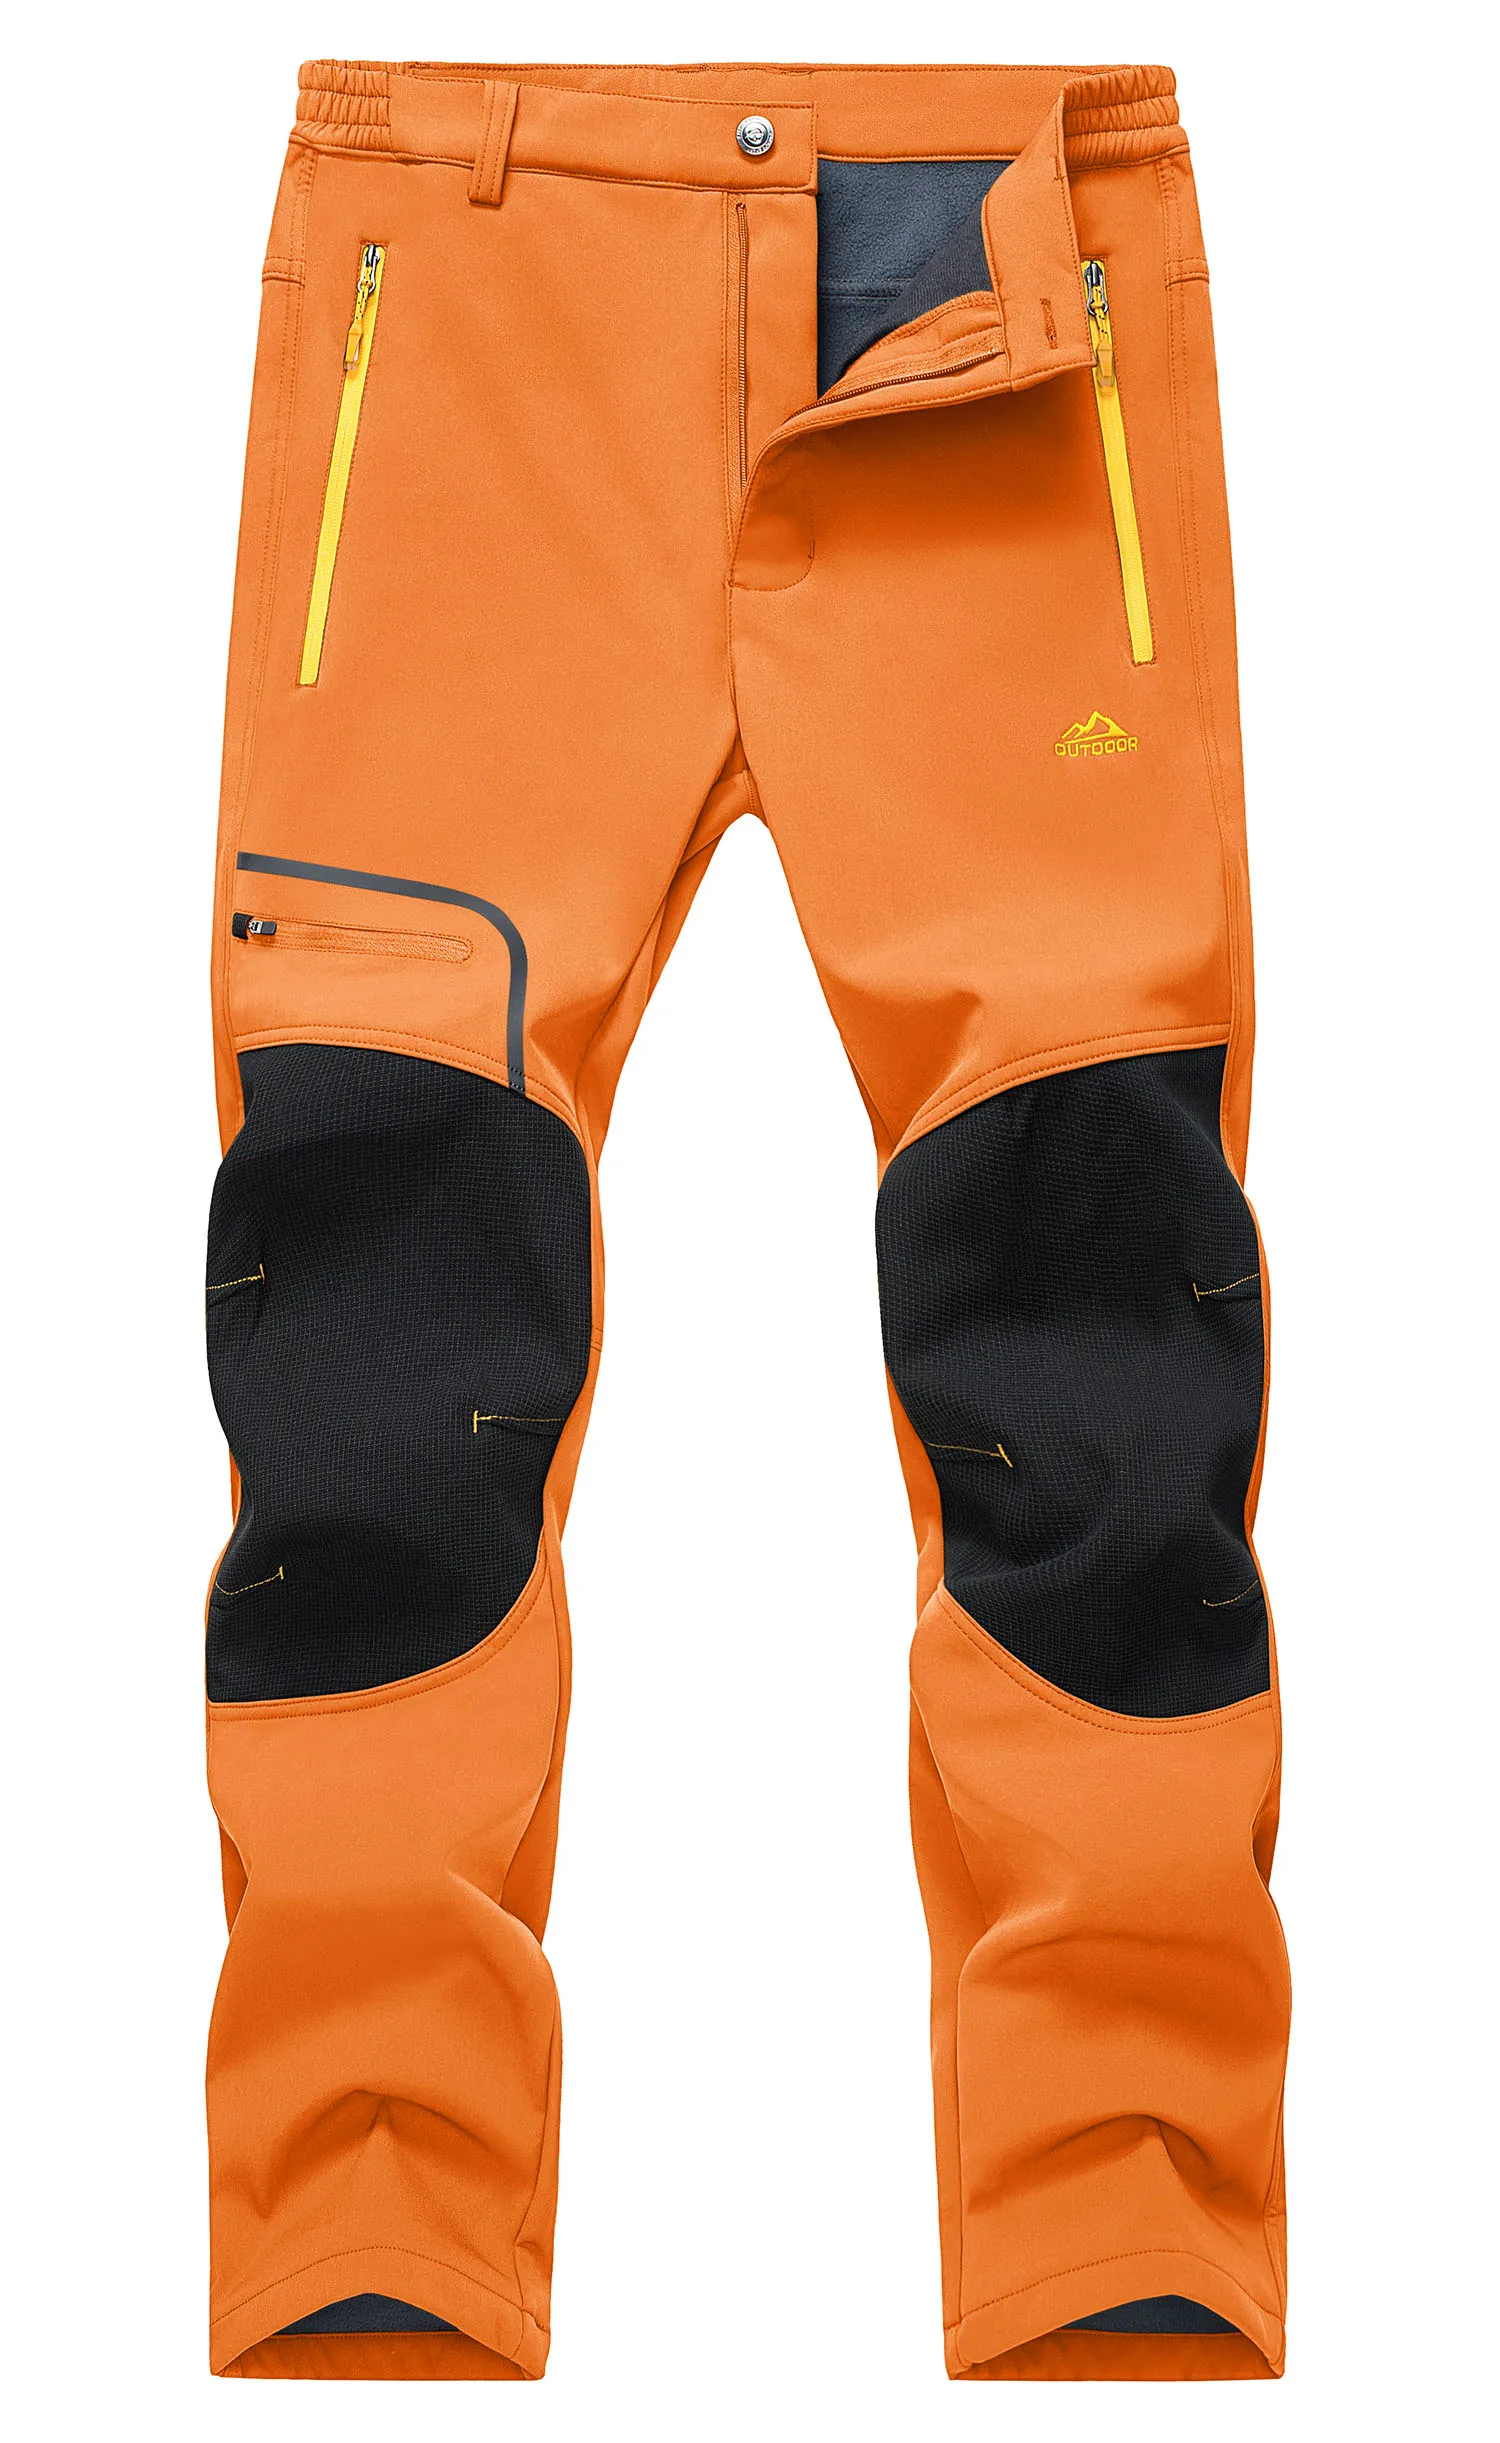 Men's Waterproof Ski Pants